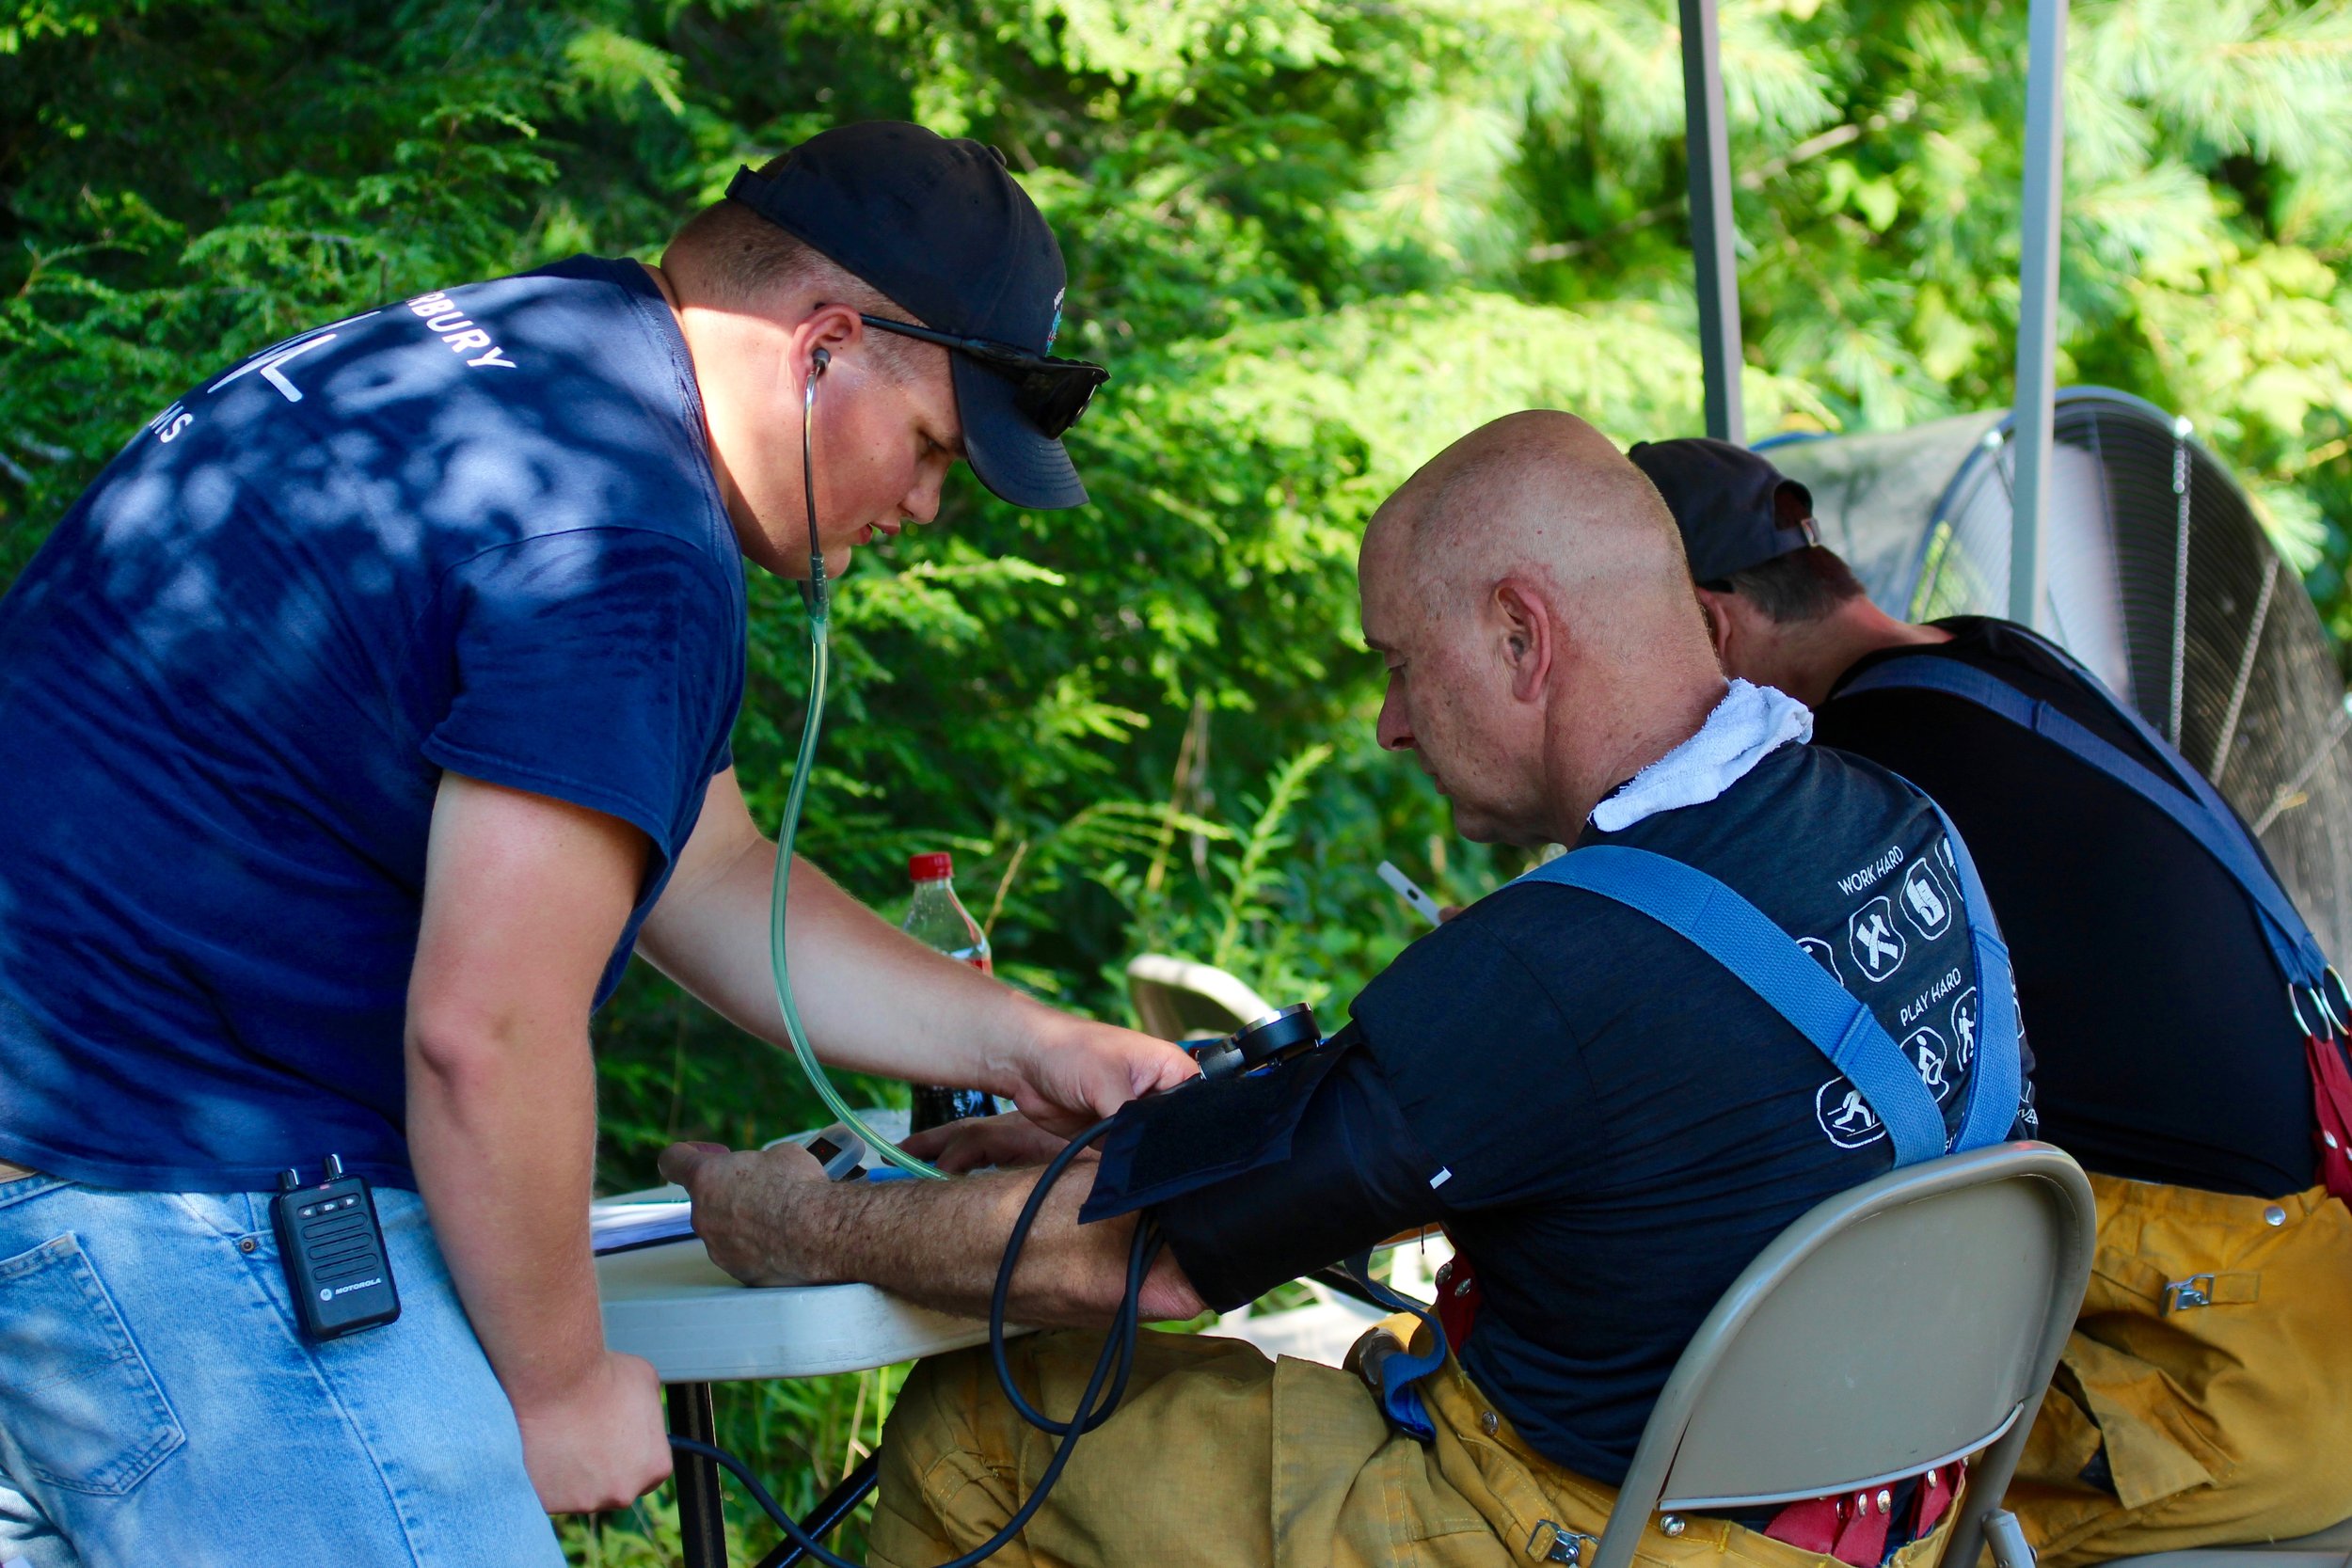   Waterbury Ambulance EMT Kaden Giroux checks firefighter John Pitrowiski’s vitals in-between rotations. Photo by René Morse  